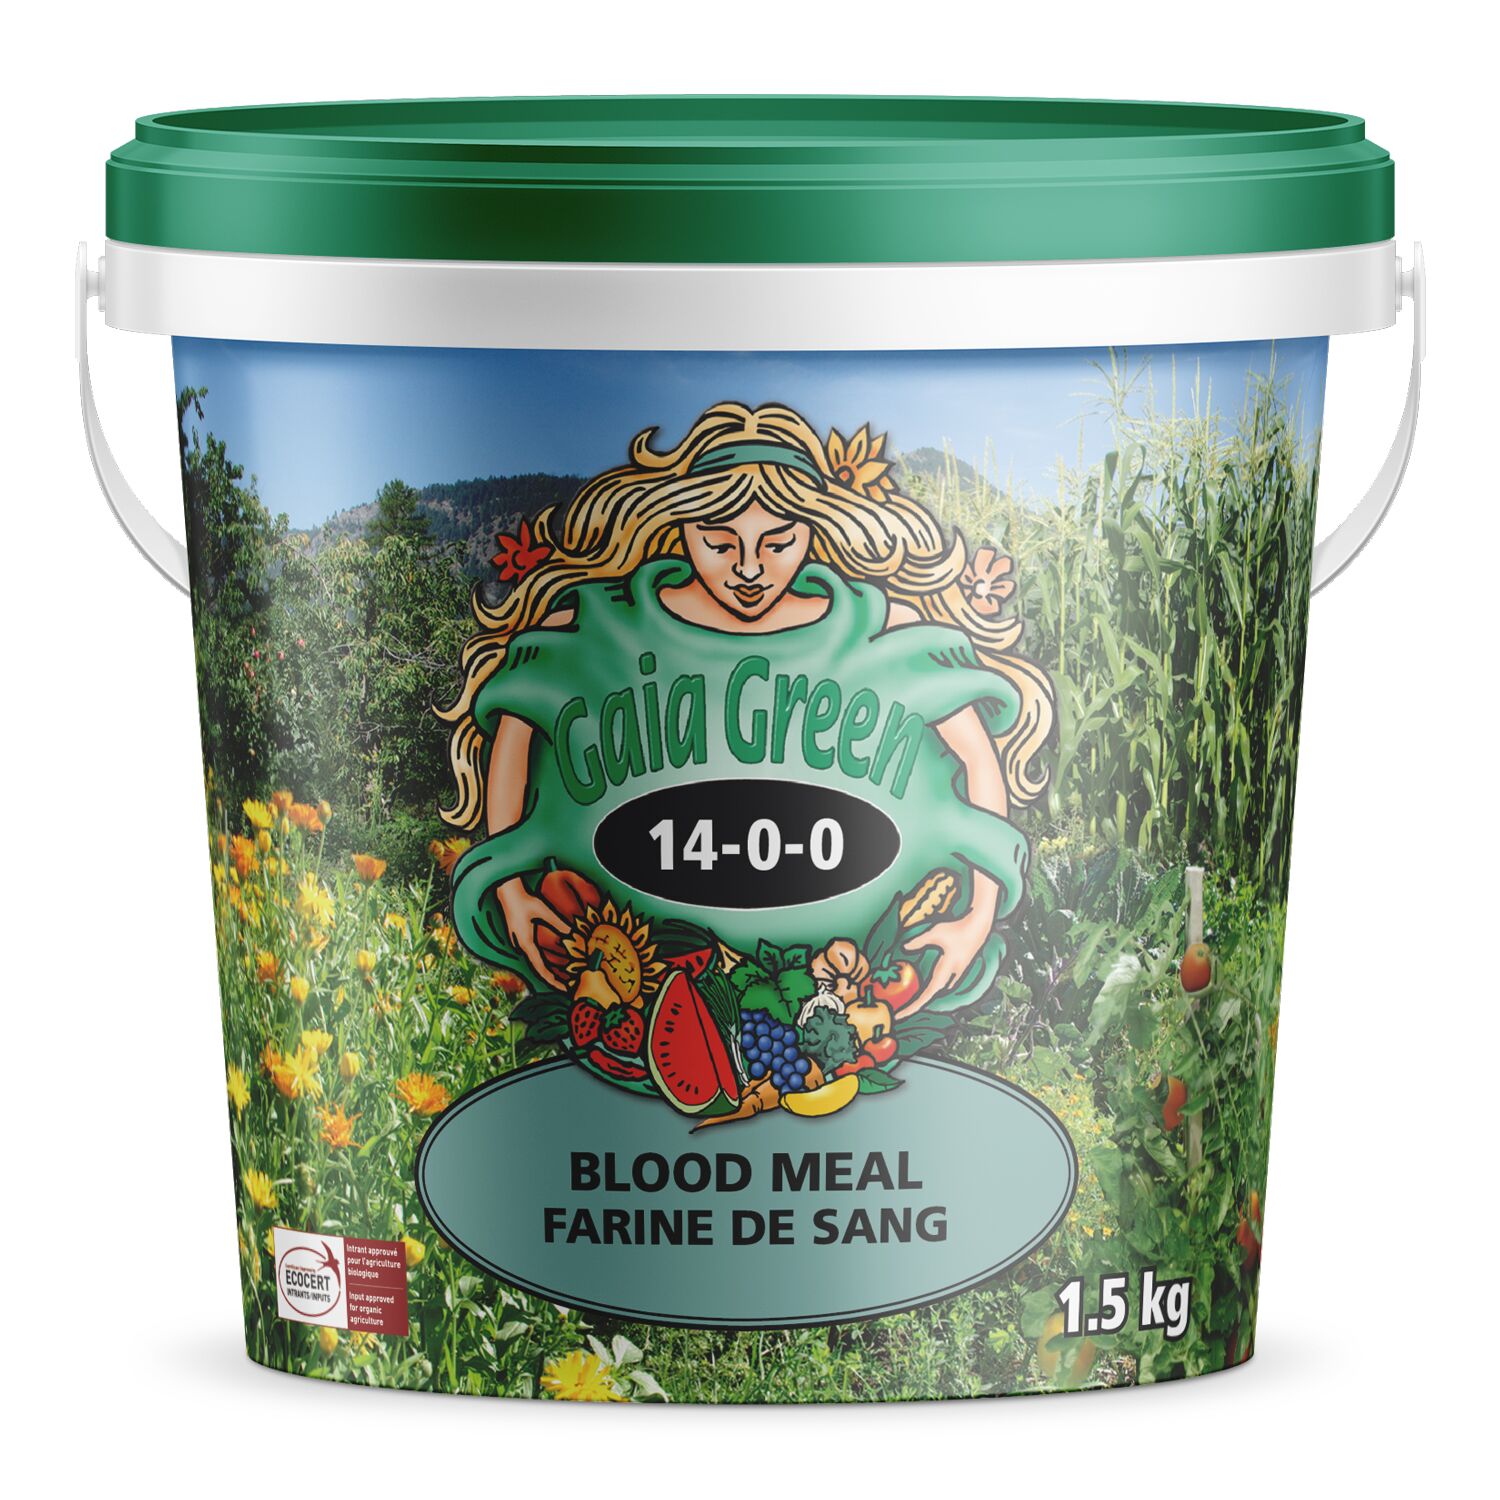 GAIA GREEN BLOOD MEAL 14-0-0 1.5KG